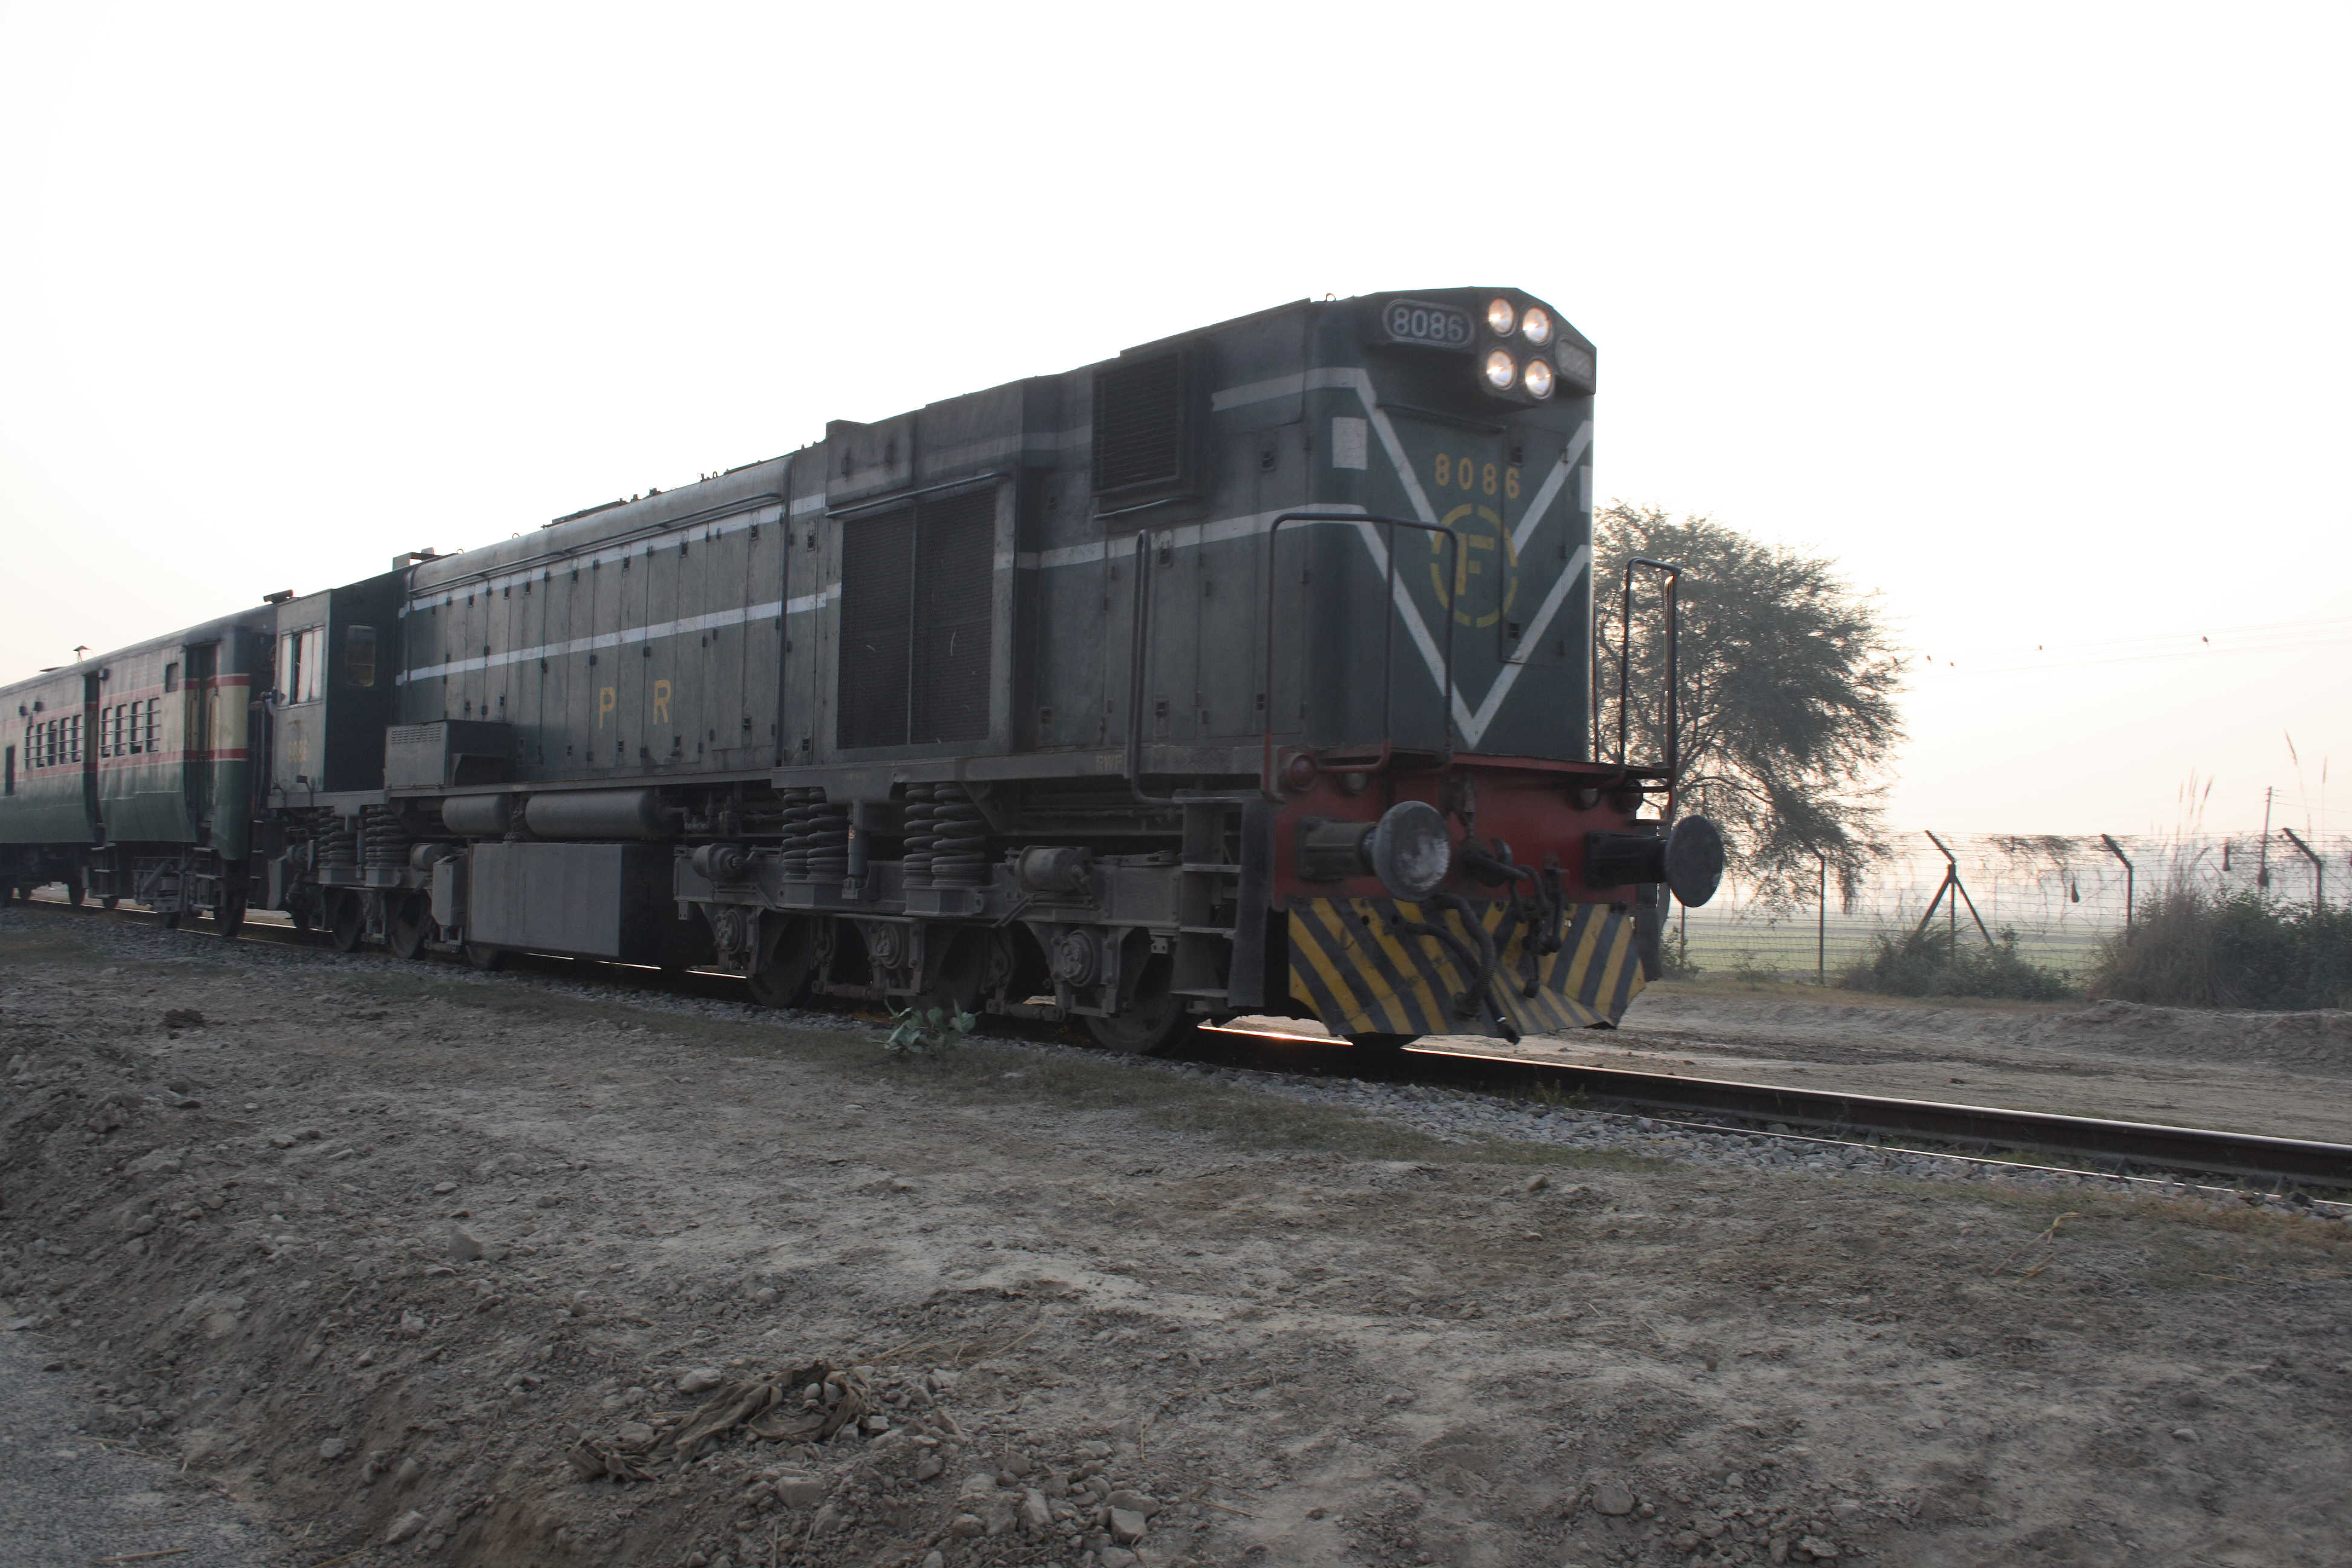 Pakistan stops Samjhauta Express at Wagah border, passengers stranded: Indian Railway sources